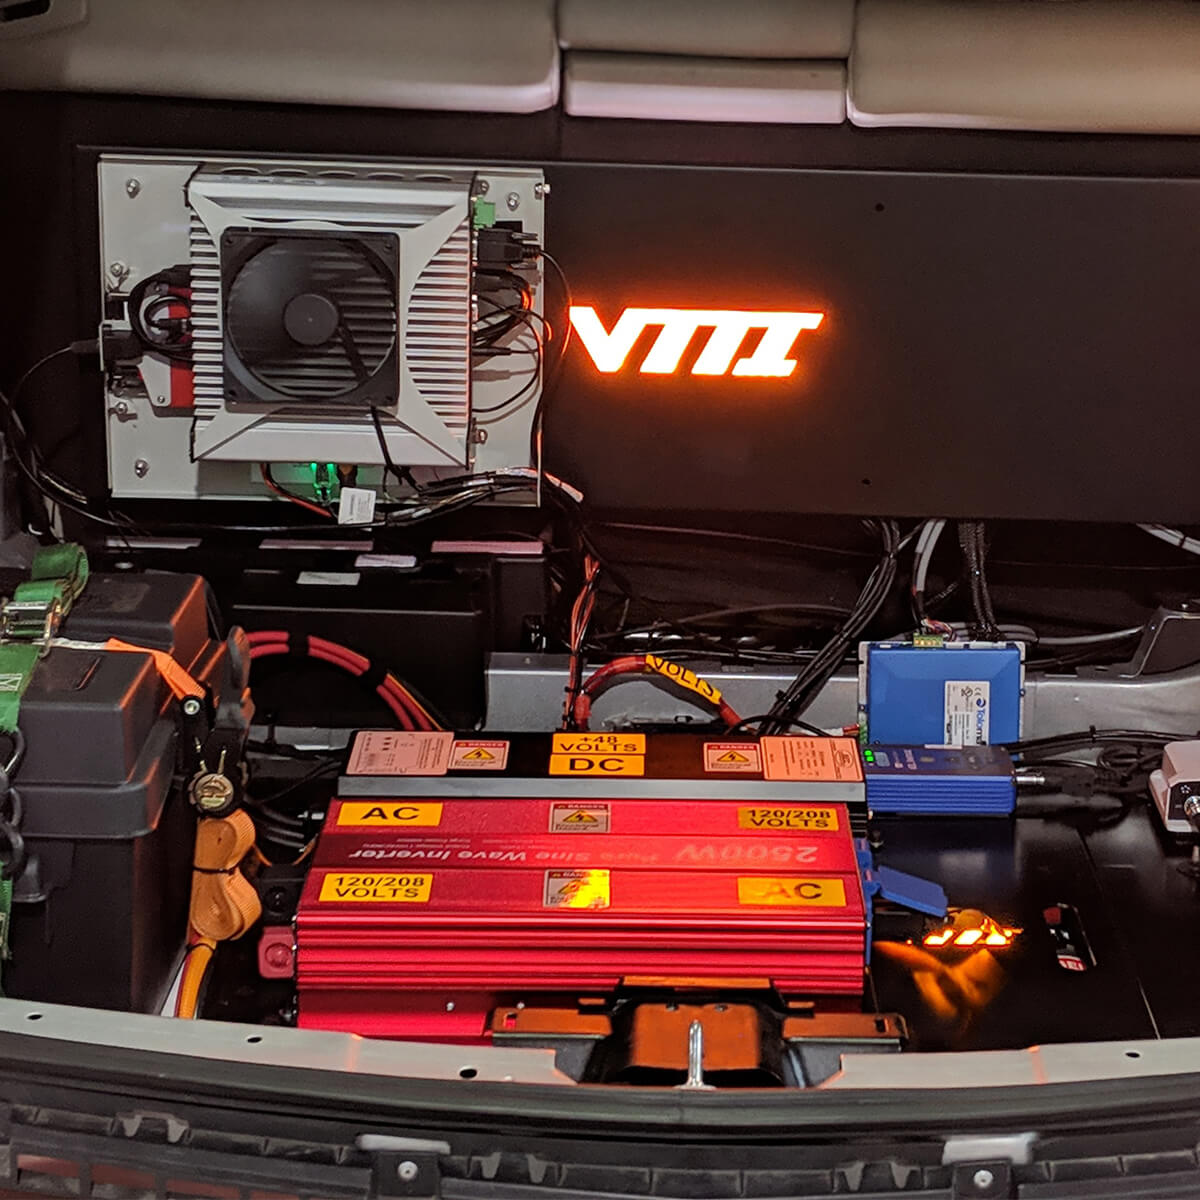 VTTI data installation in vehicle